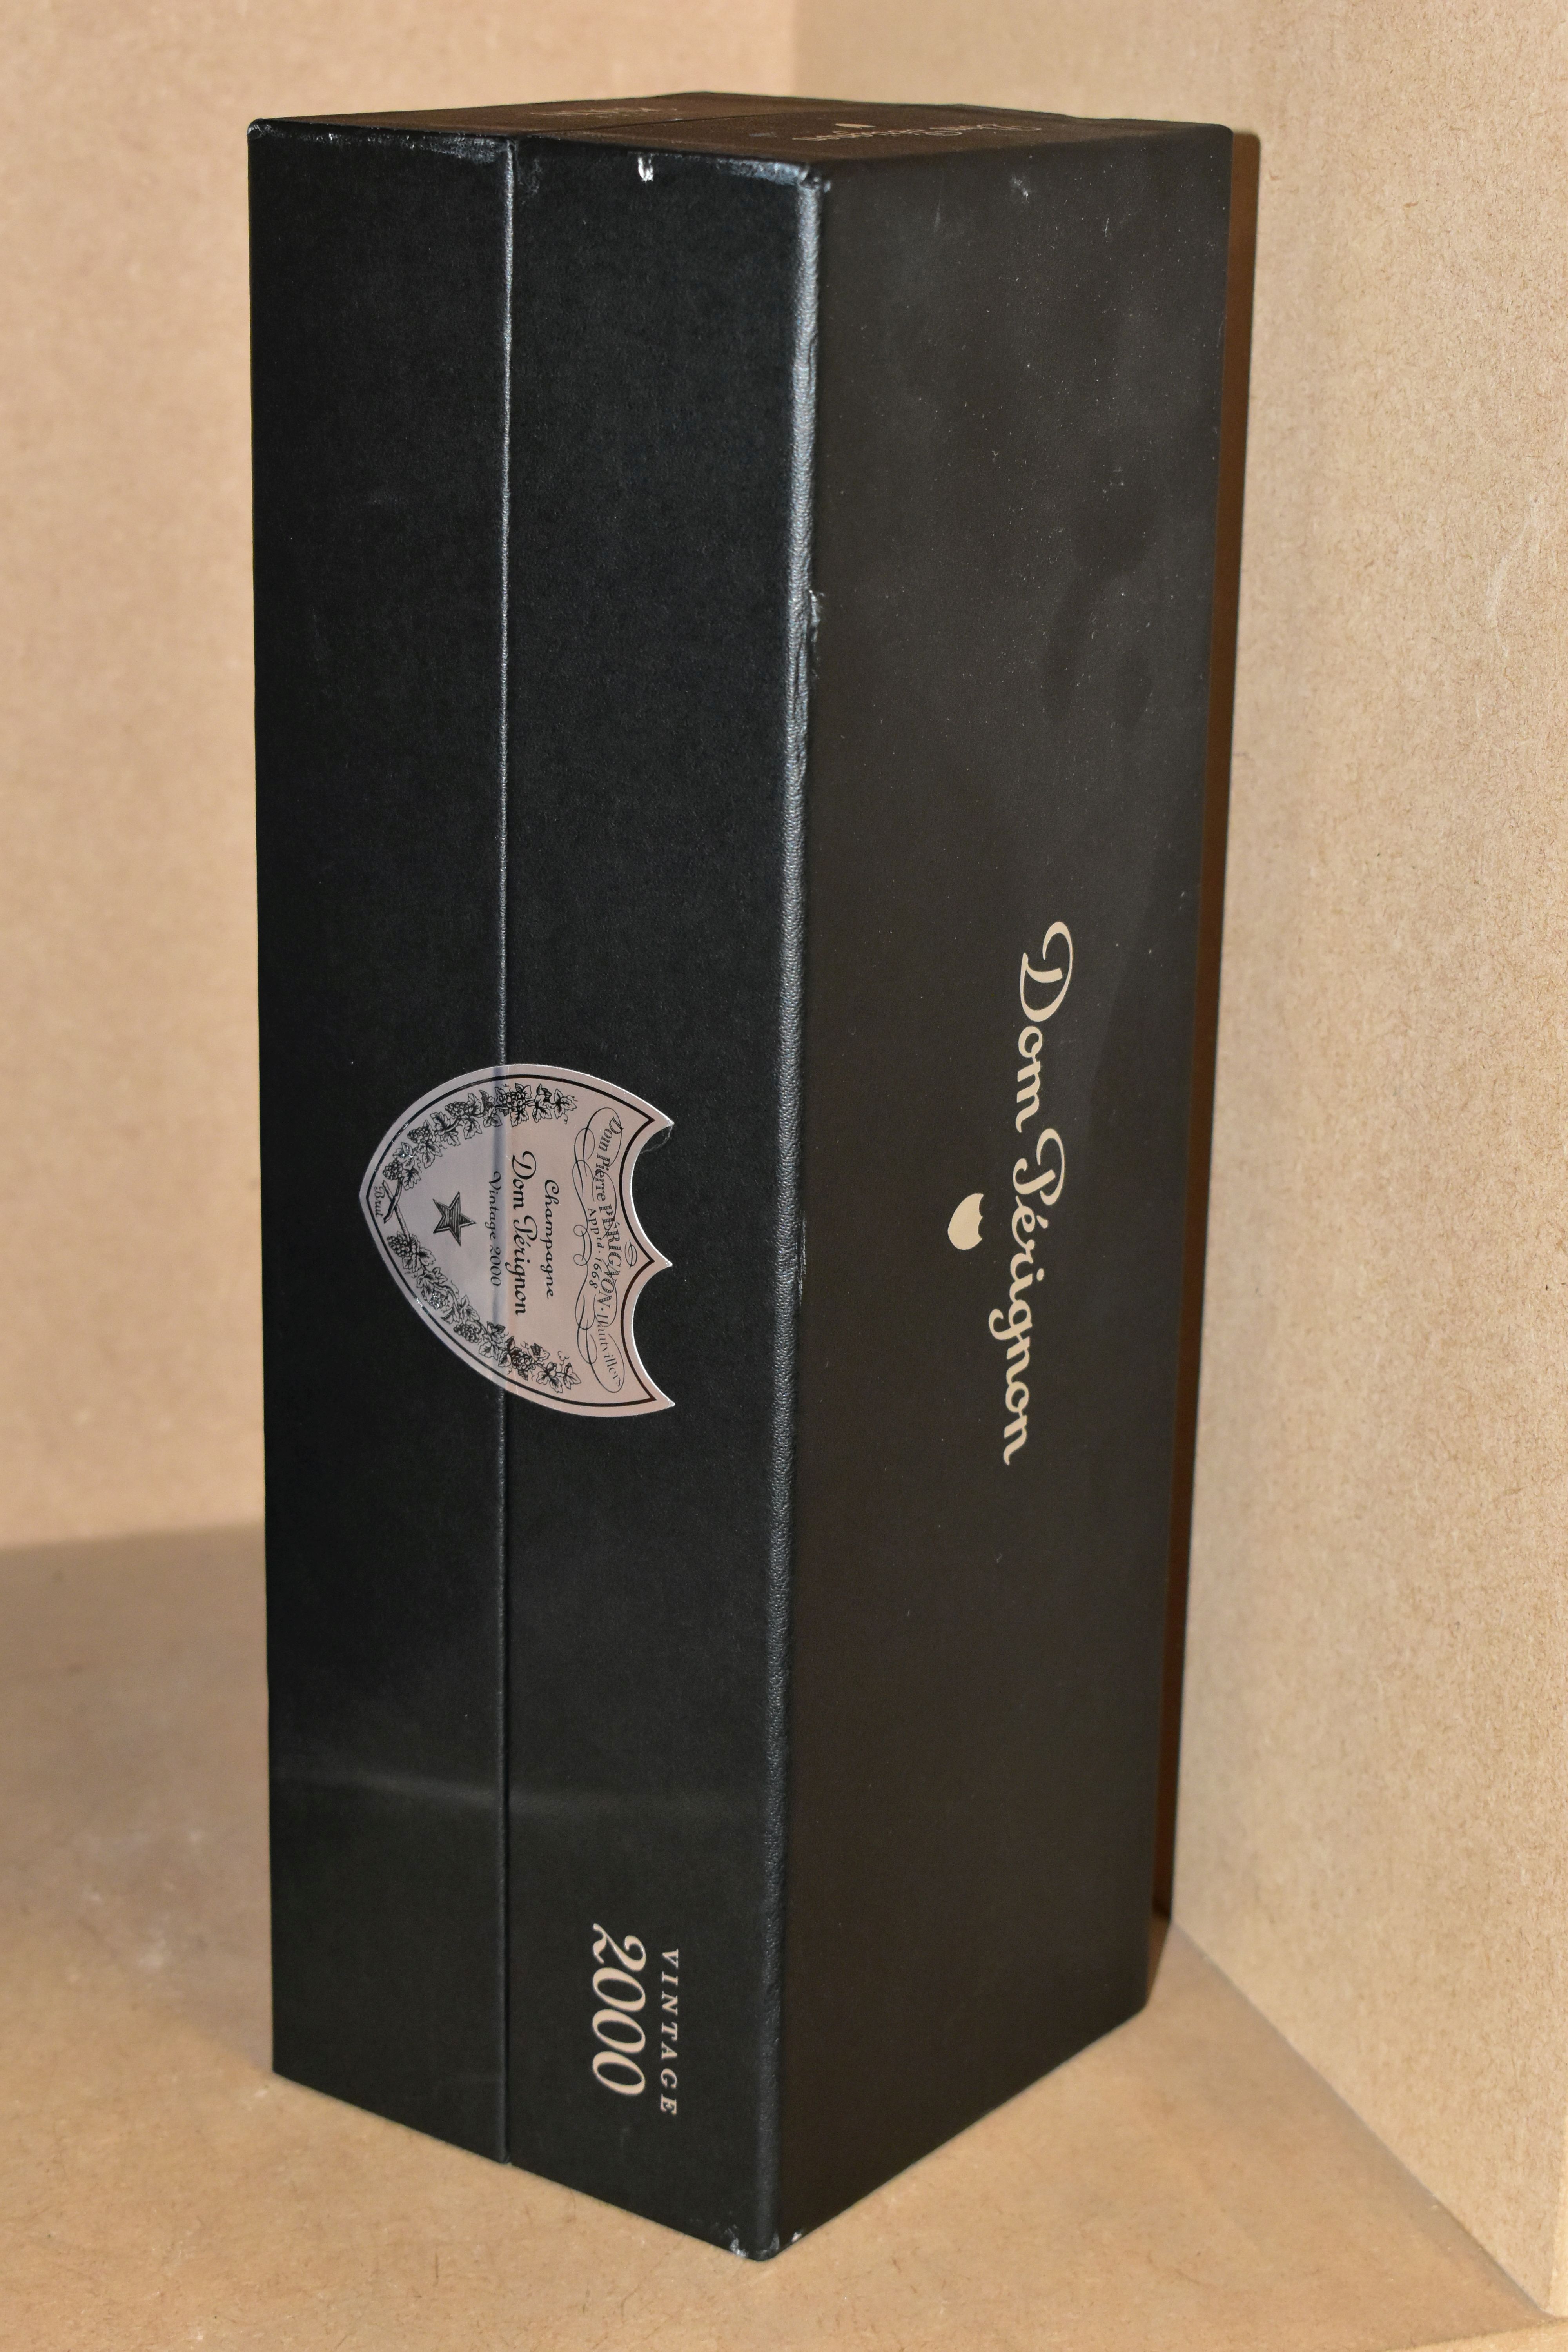 DOM PERIGNON Vintage 2000, 12.5% vol, 750ml, one bottle in a sealed presentation box (1)